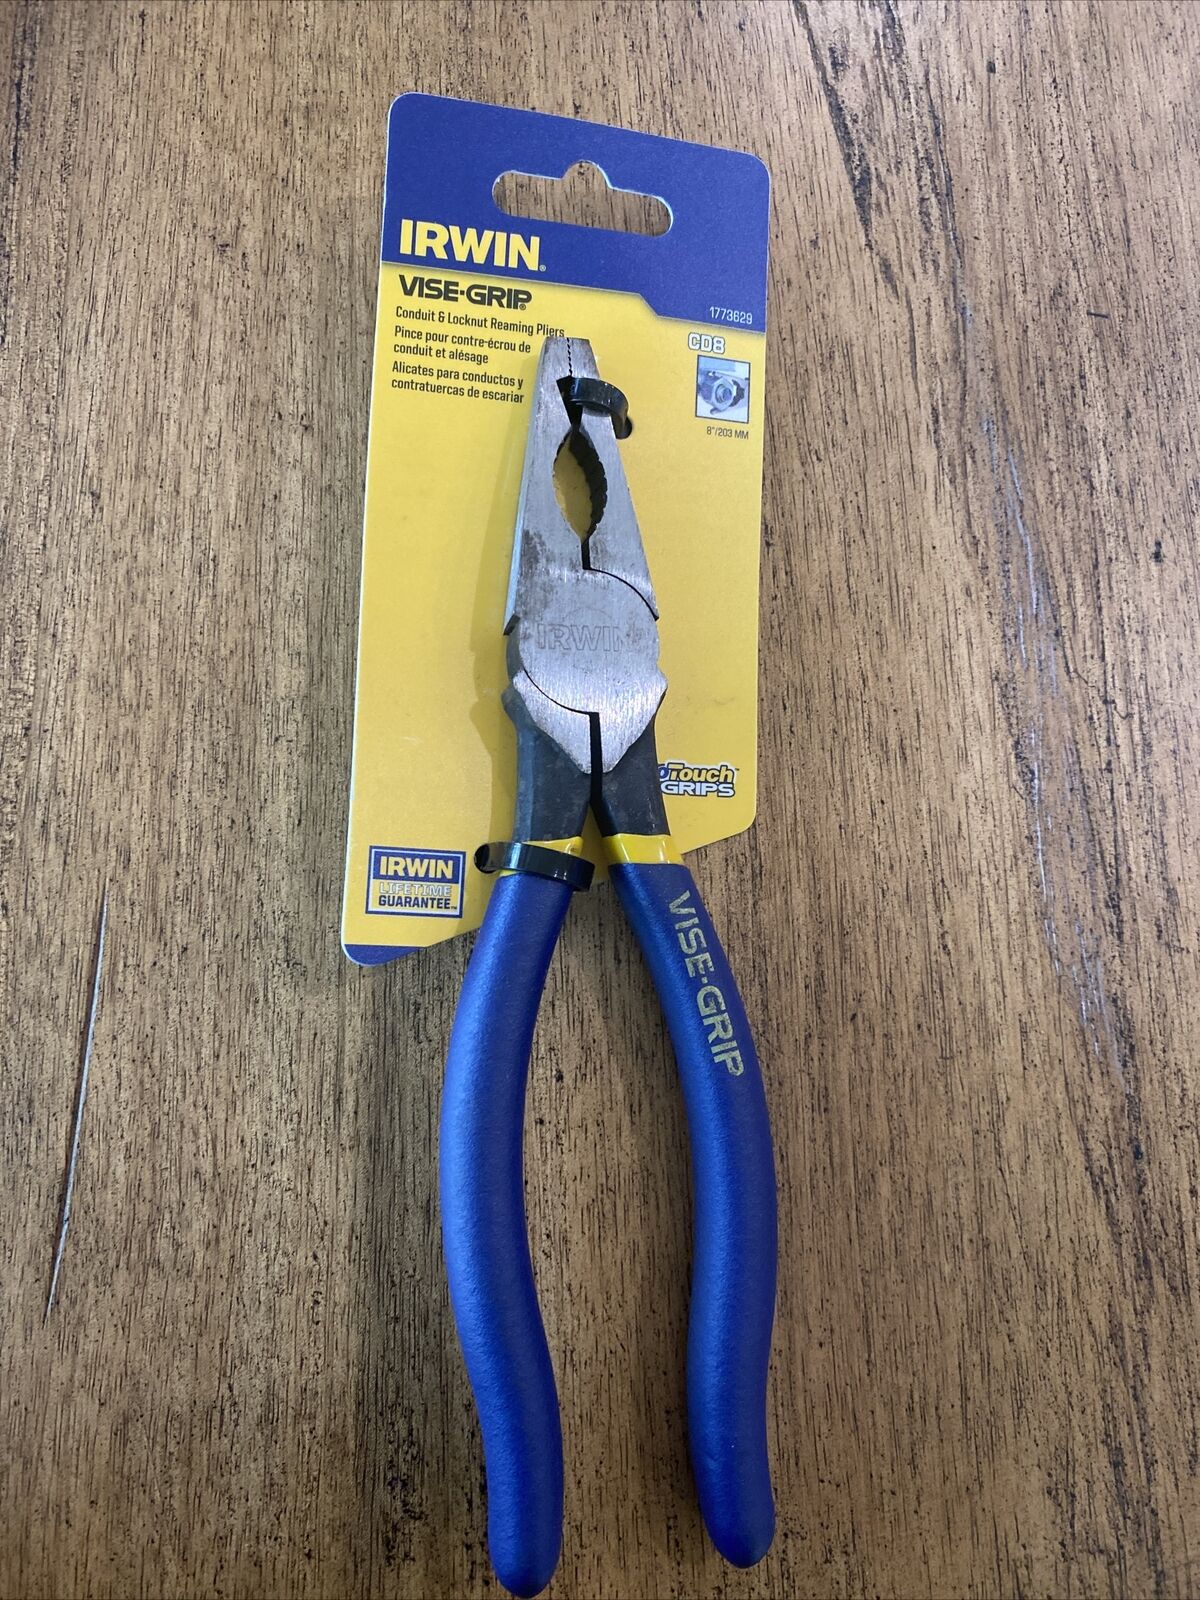 Irwin Vise-grip  1773629 8” Grip Conduit & Locknut Reaming Pliers Cd8 Brand New